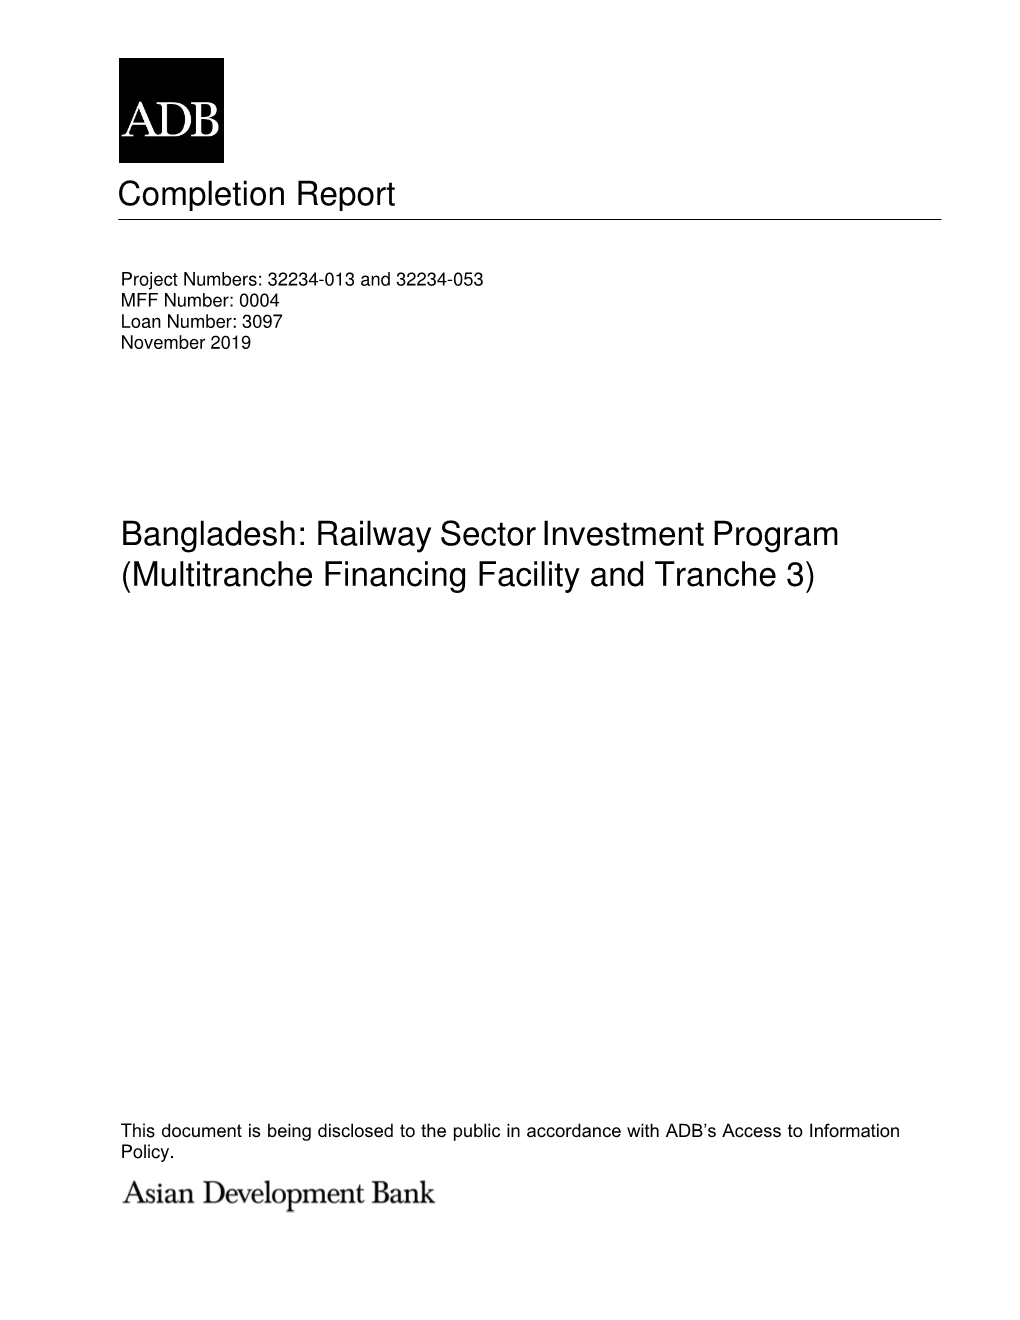 32234-053: Railway Sector Investment Program